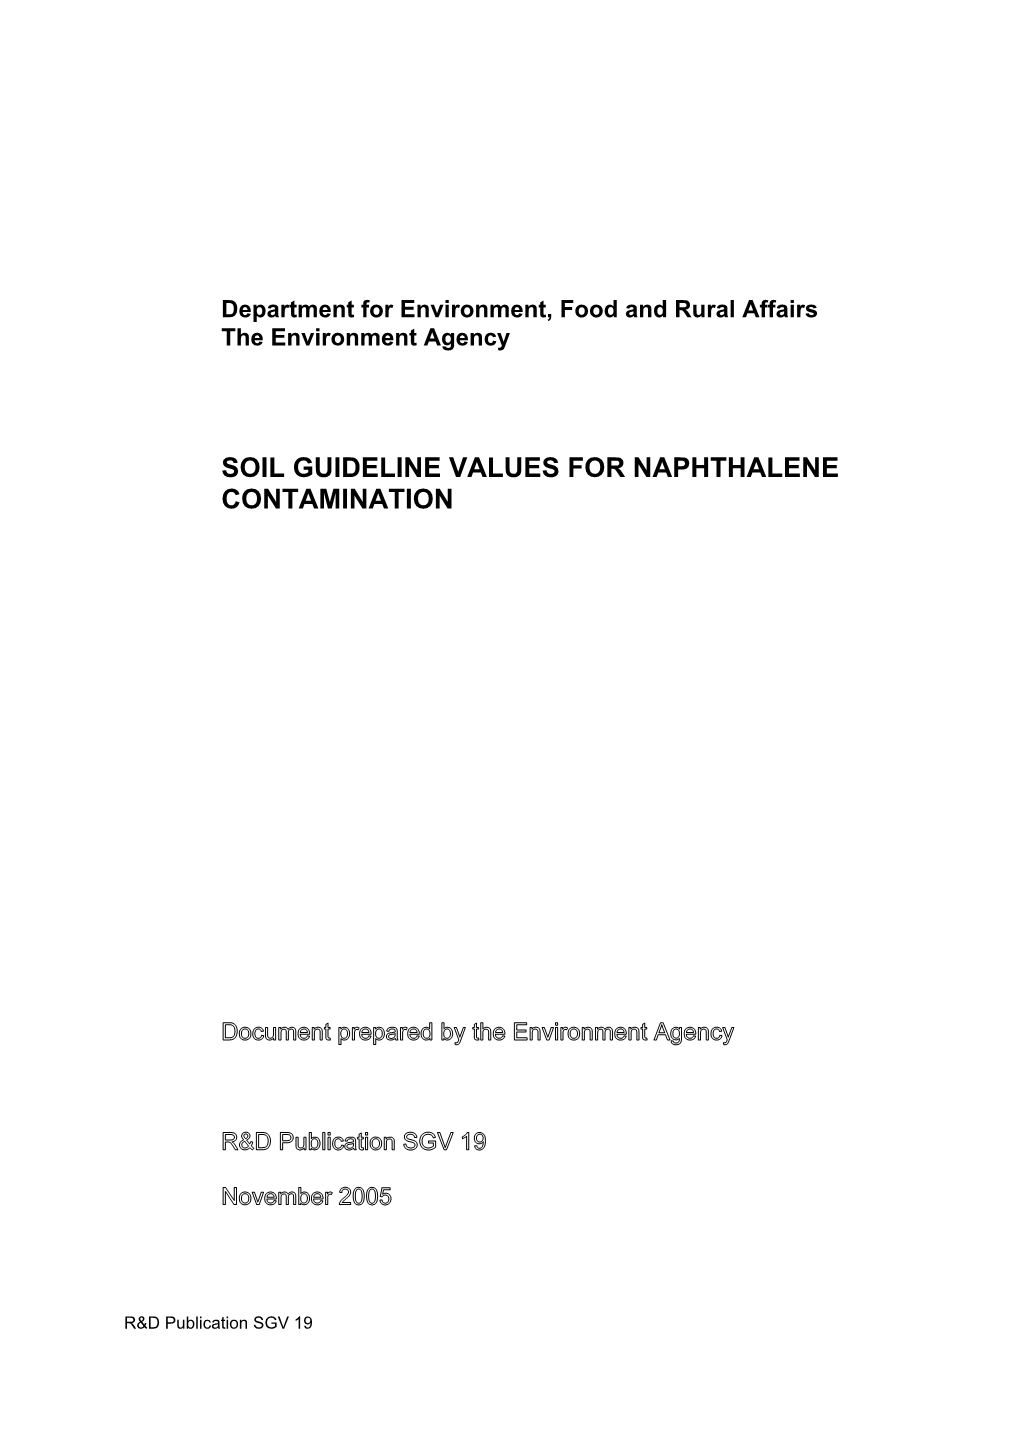 Soil Guideline Values for Naphthalene Contamination